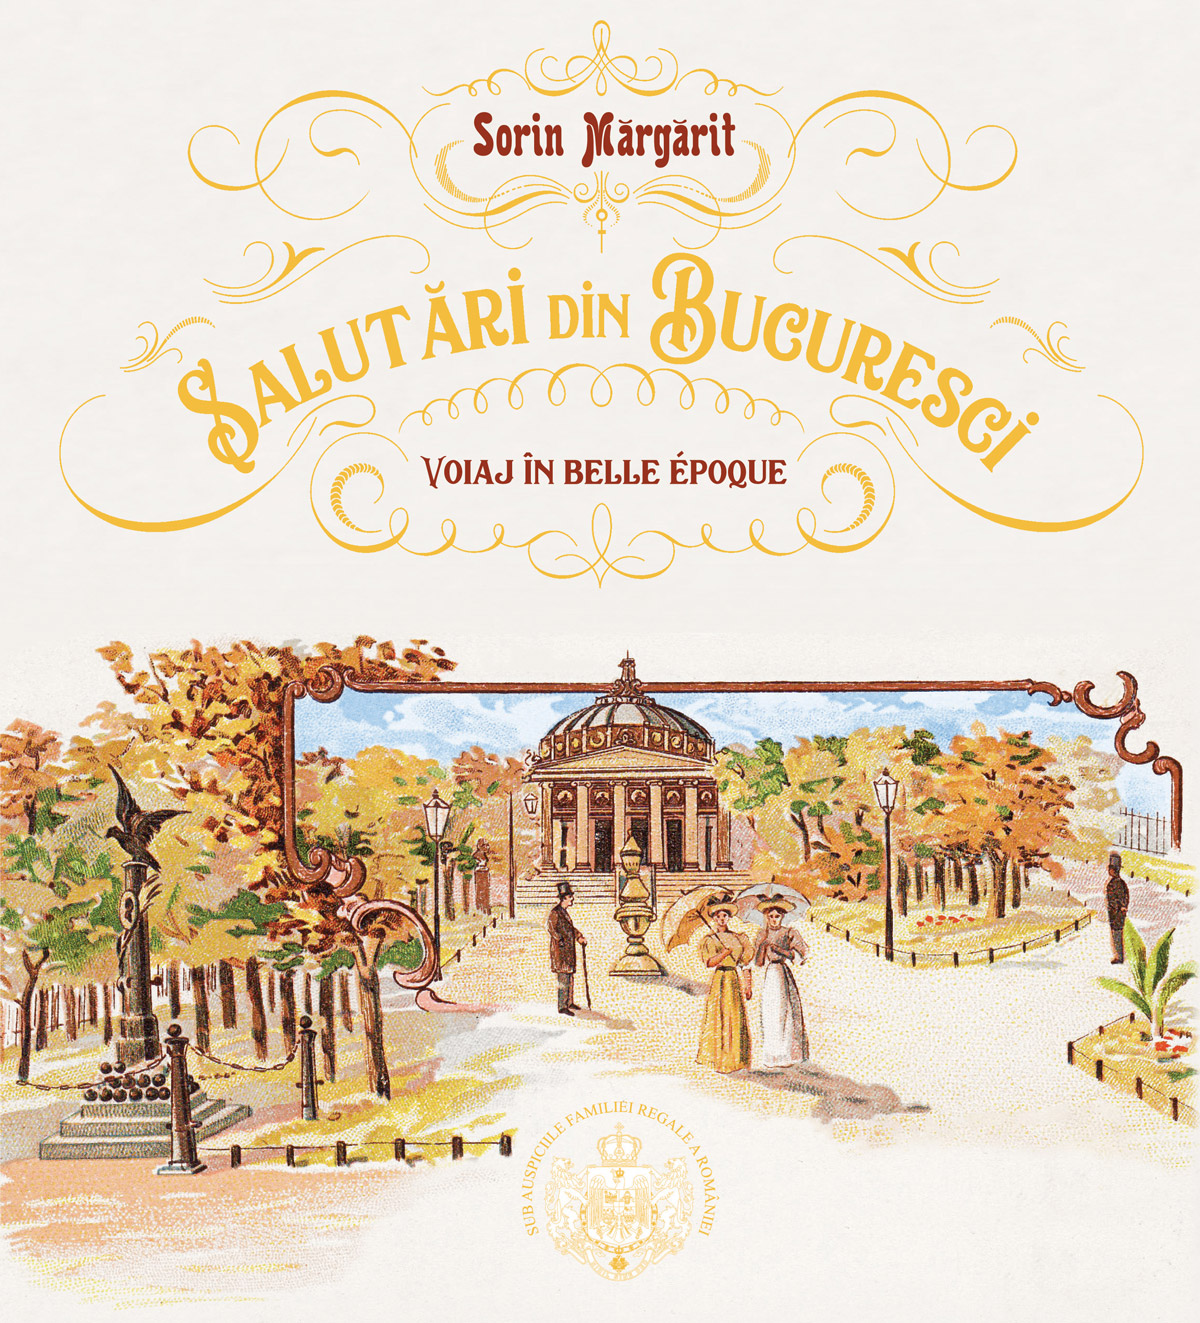 Salutari din Bucuresci. Voiaj in Belle Epoque | Sorin Margarit carturesti.ro poza bestsellers.ro